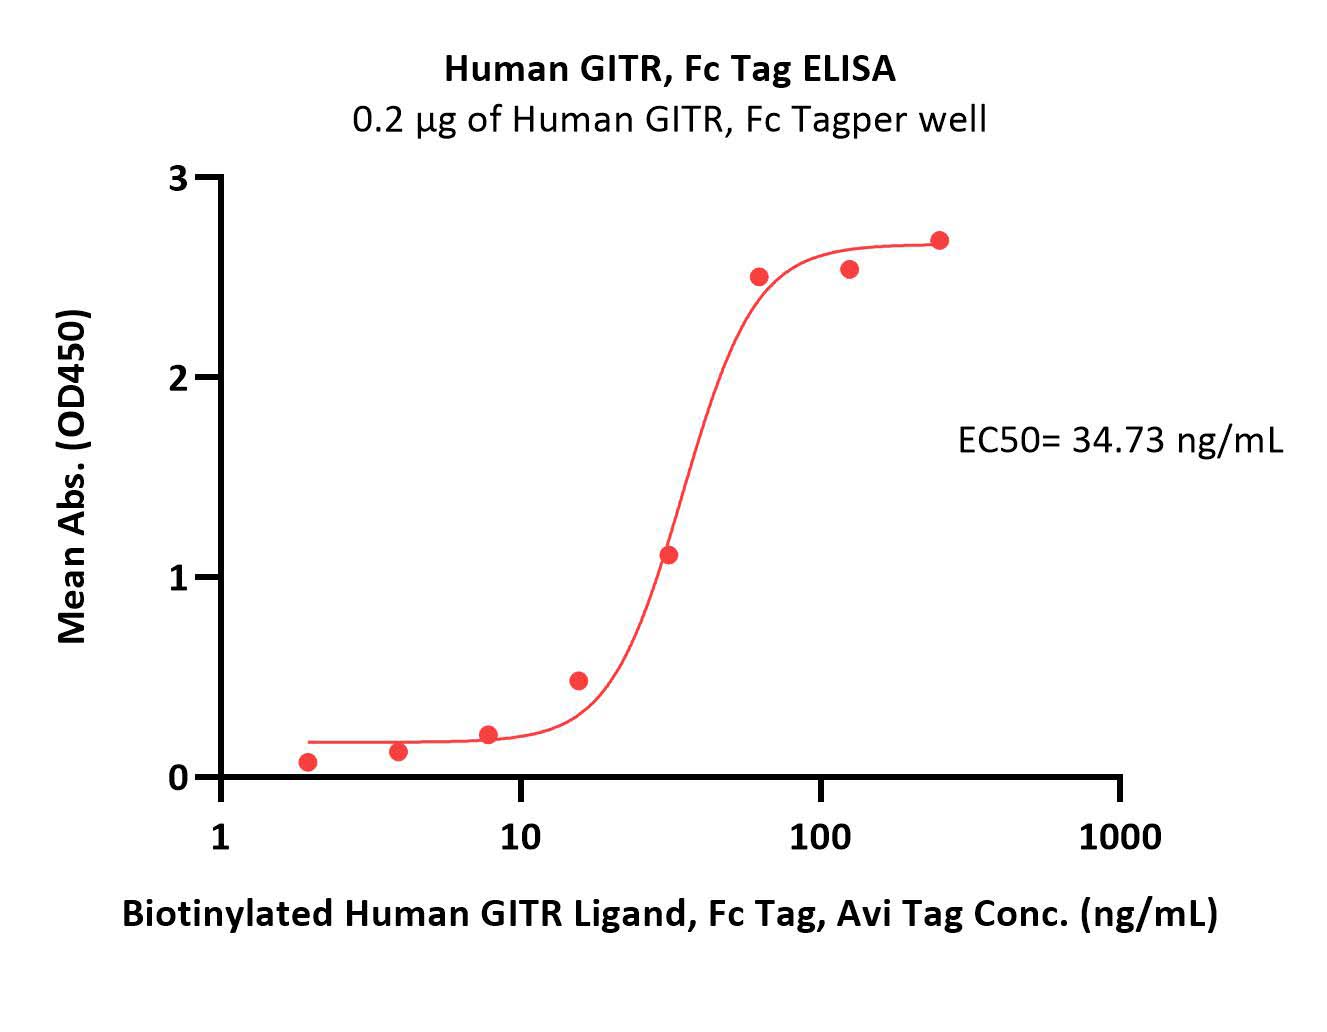 GITR Ligand ELISA